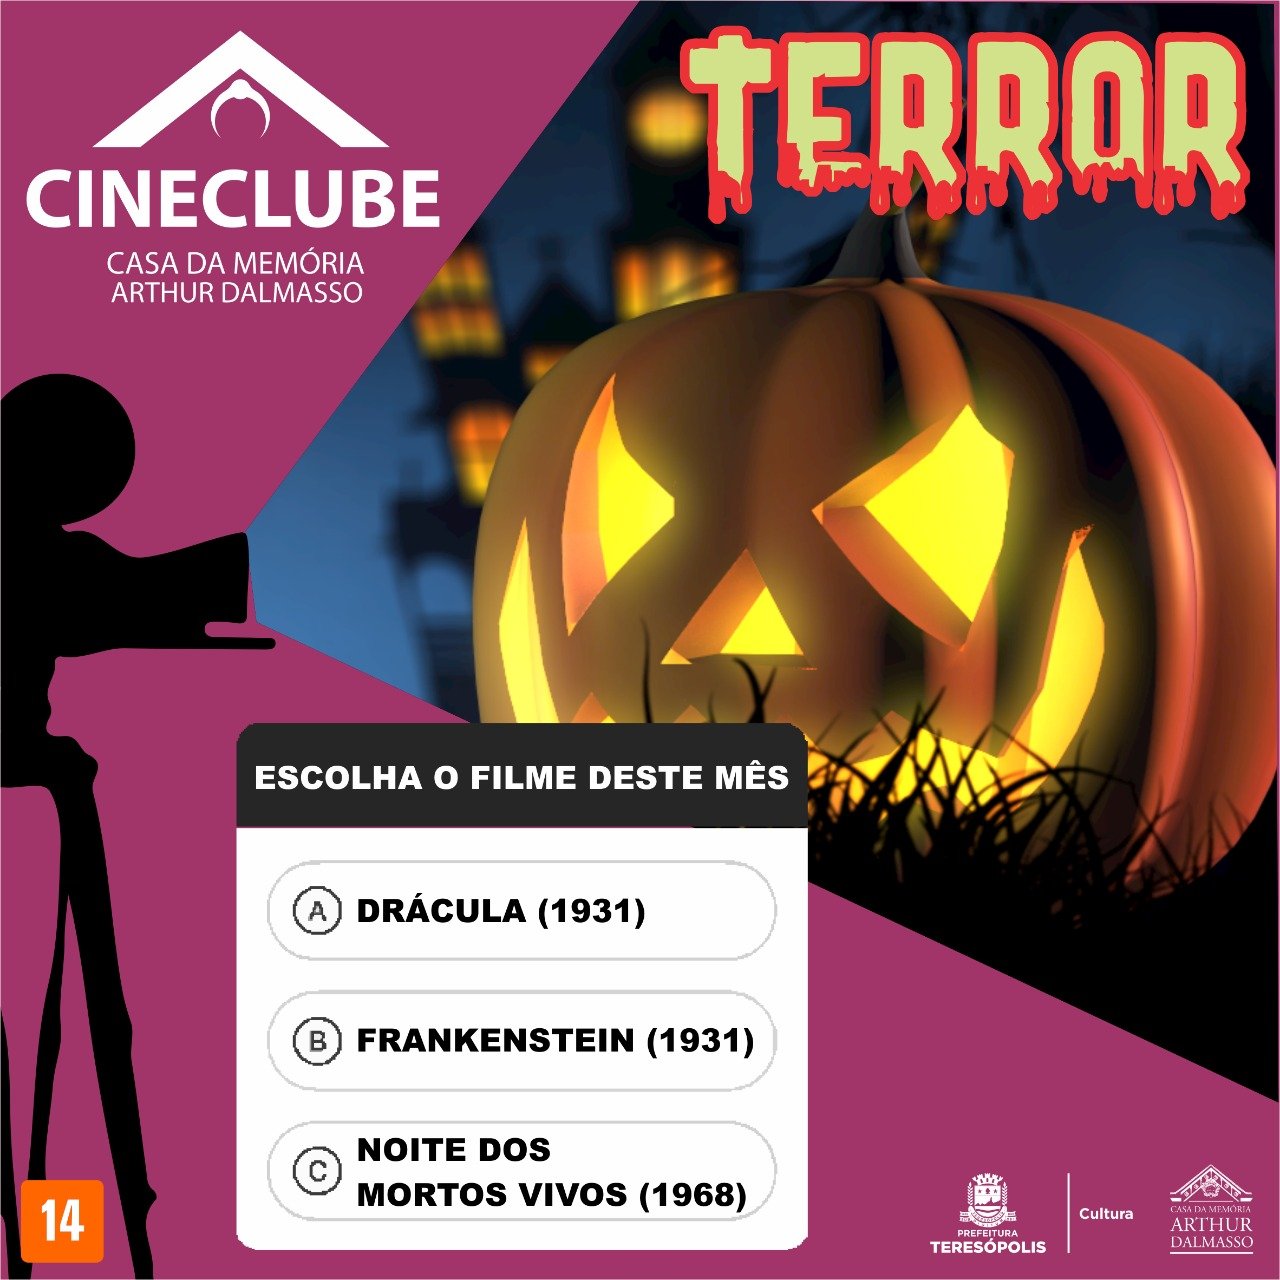 Teresópolis: “Cineclube” realiza sessão terror de cinema na Casa da Memória